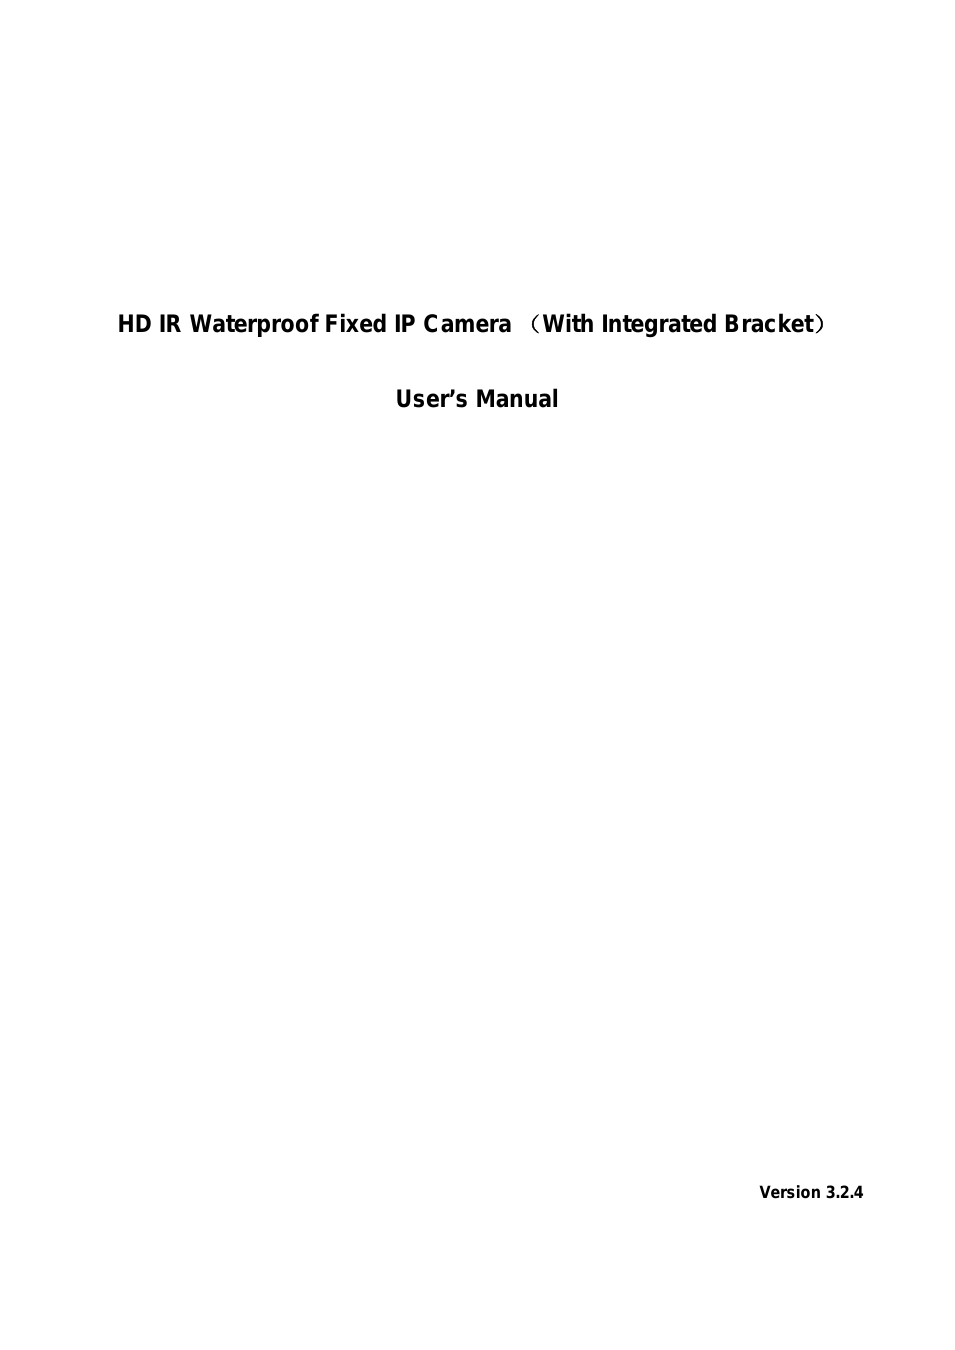 2 MegaPixel 3.3-12mm VF Full HD Vandal Proof IP Bullet Camera with IR & POE (ICIPB2000)